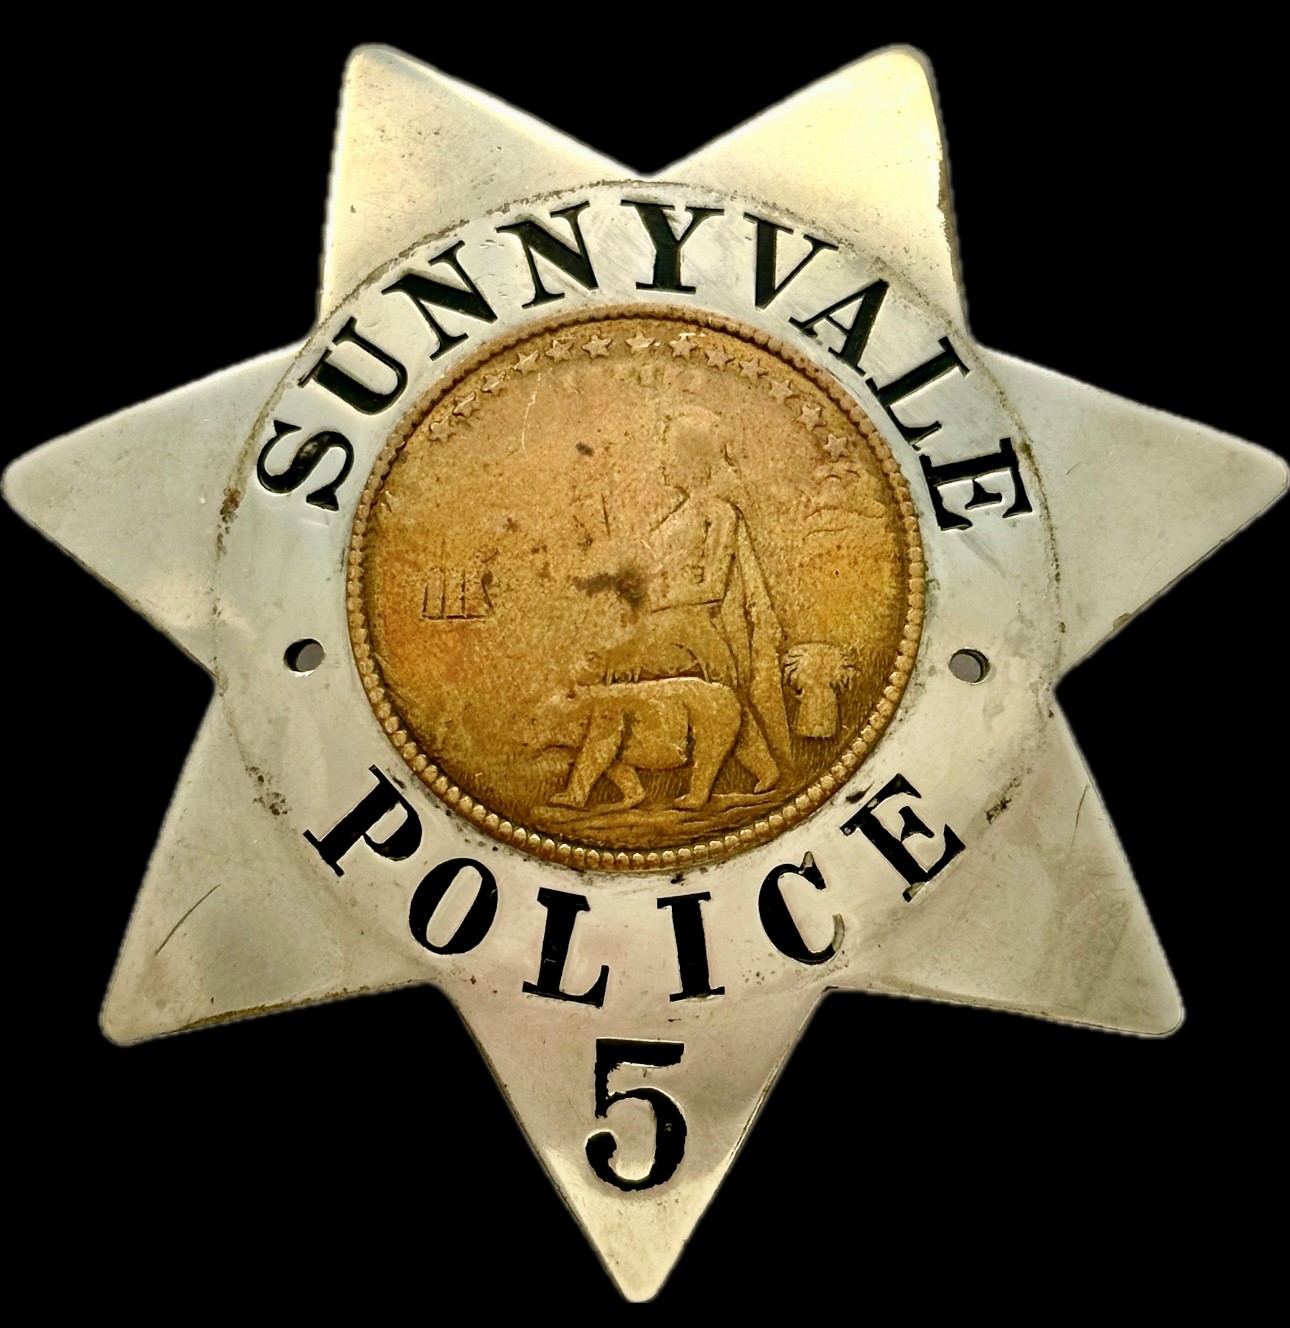 Sunnyvale police badge 5